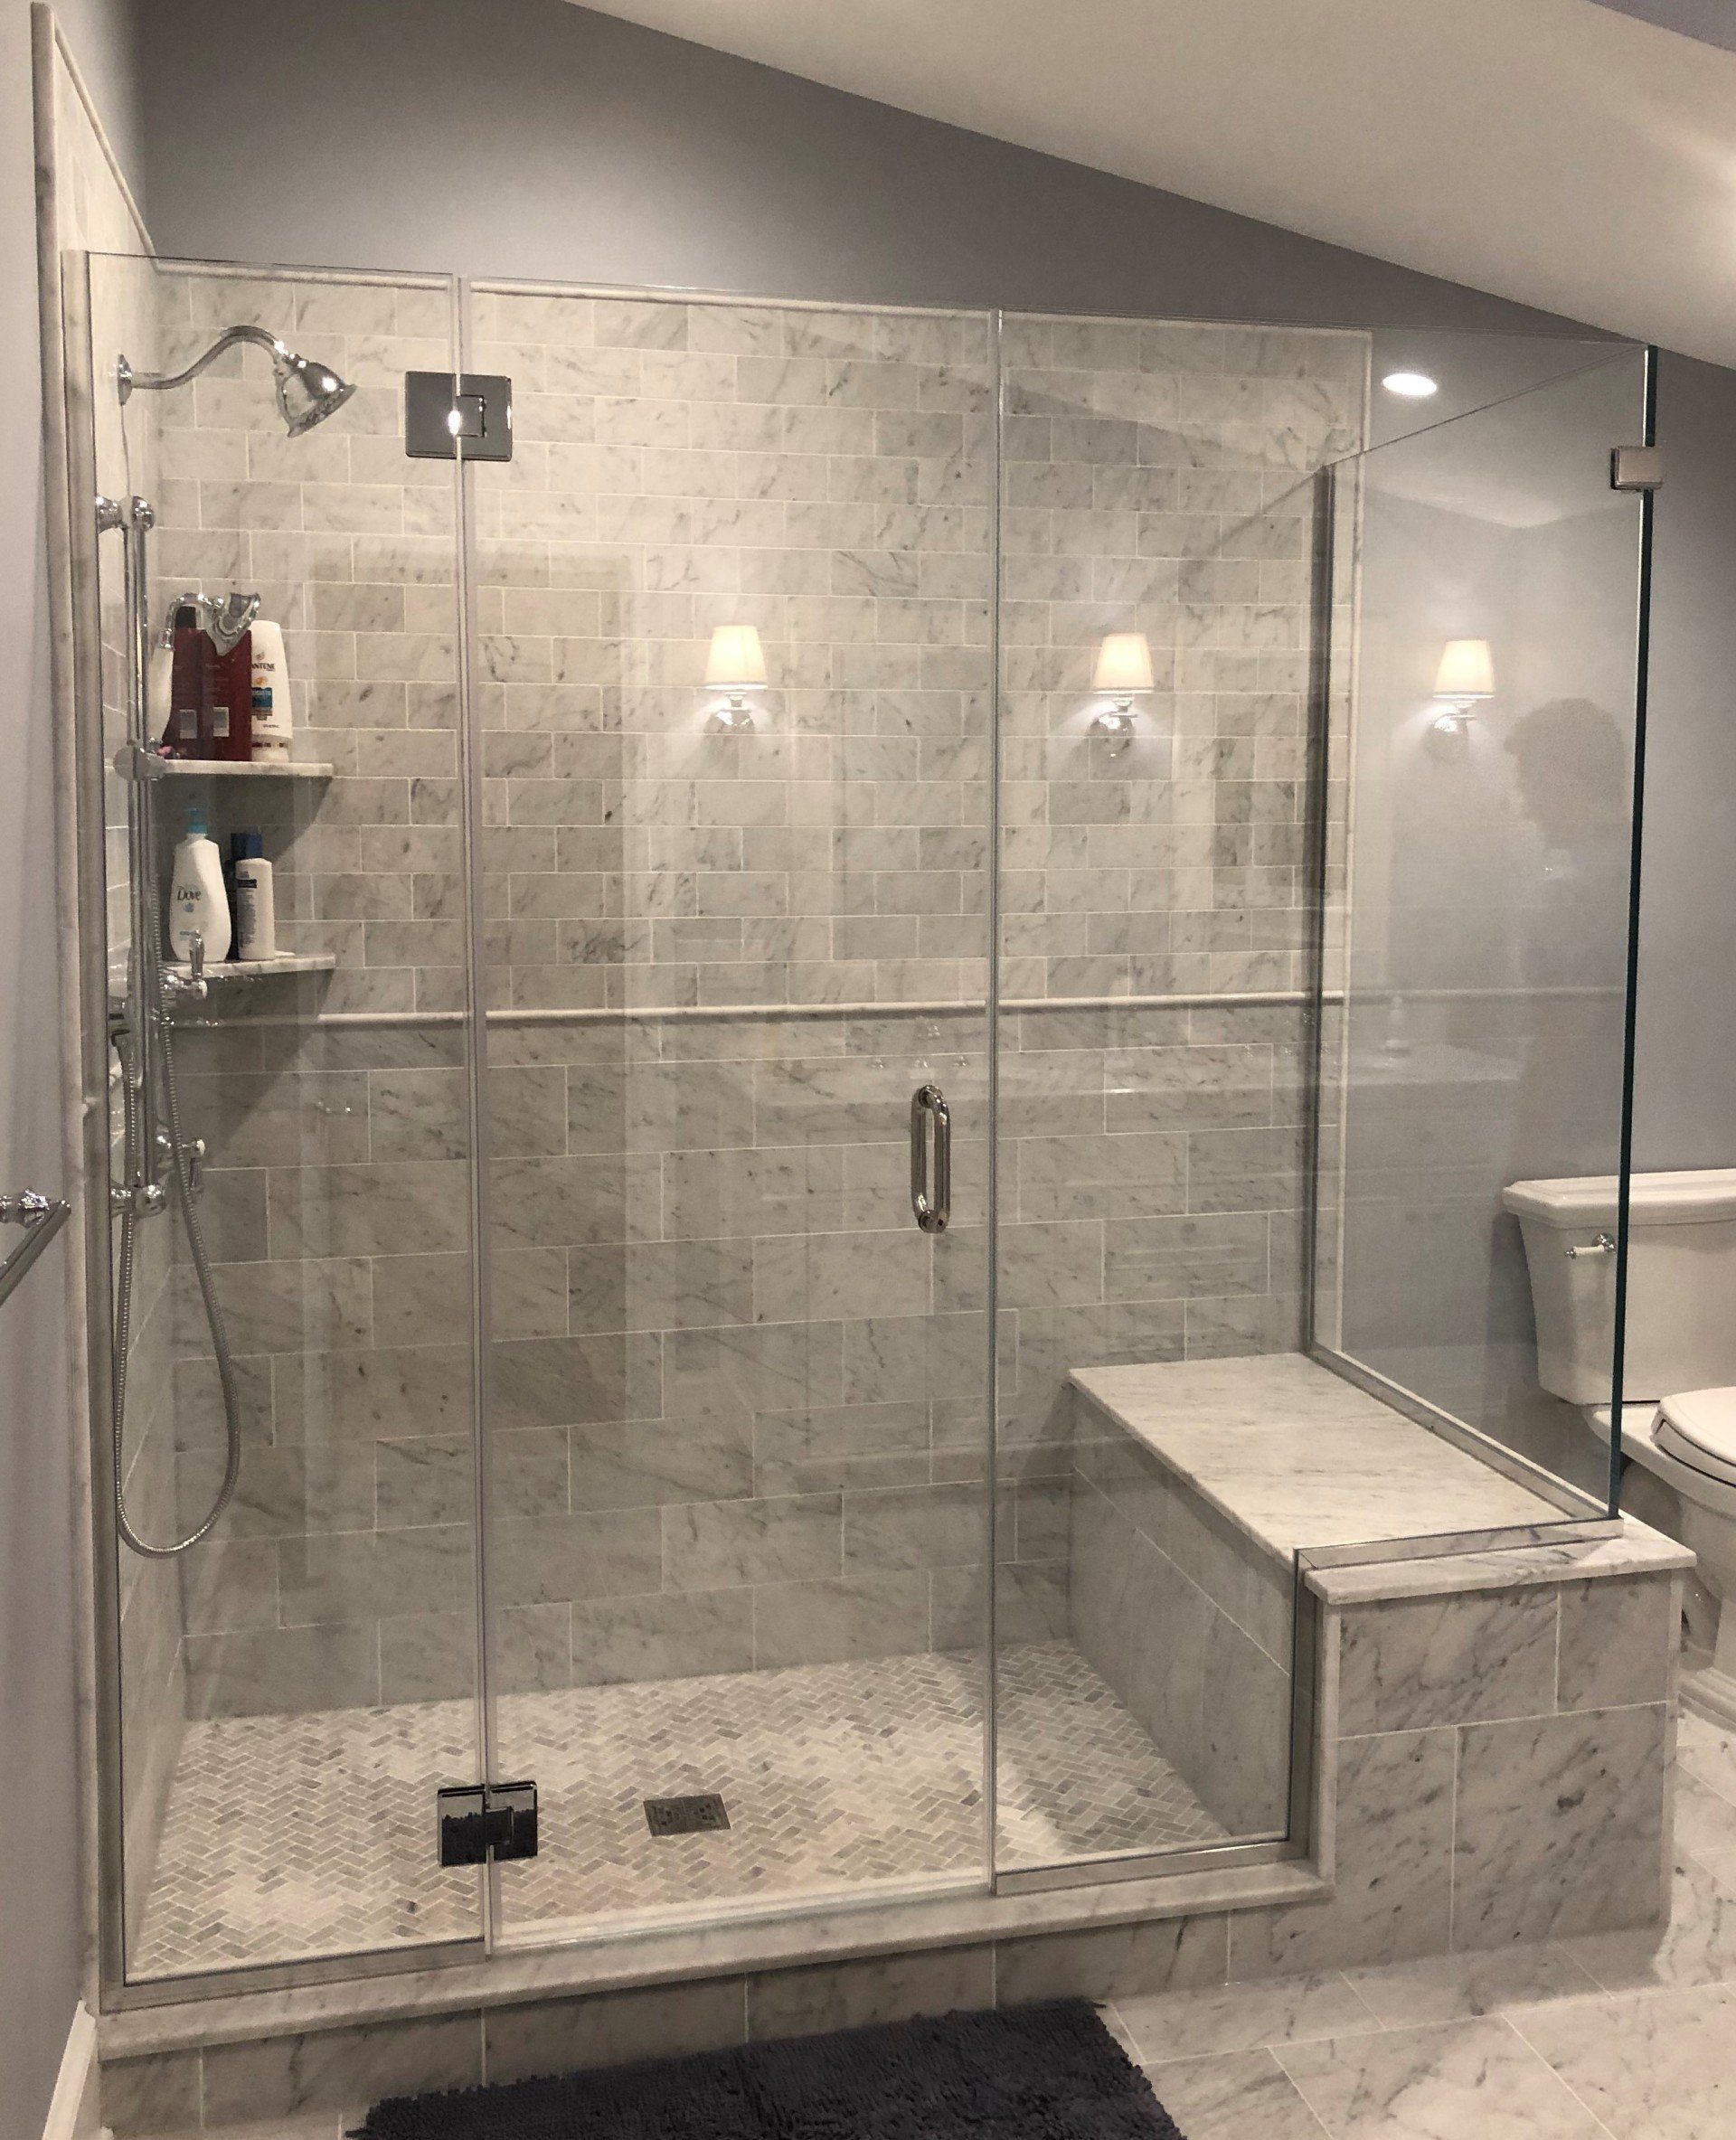 Bathroom Supply Company — Elegant Bathroom Design in Harrison, NJ